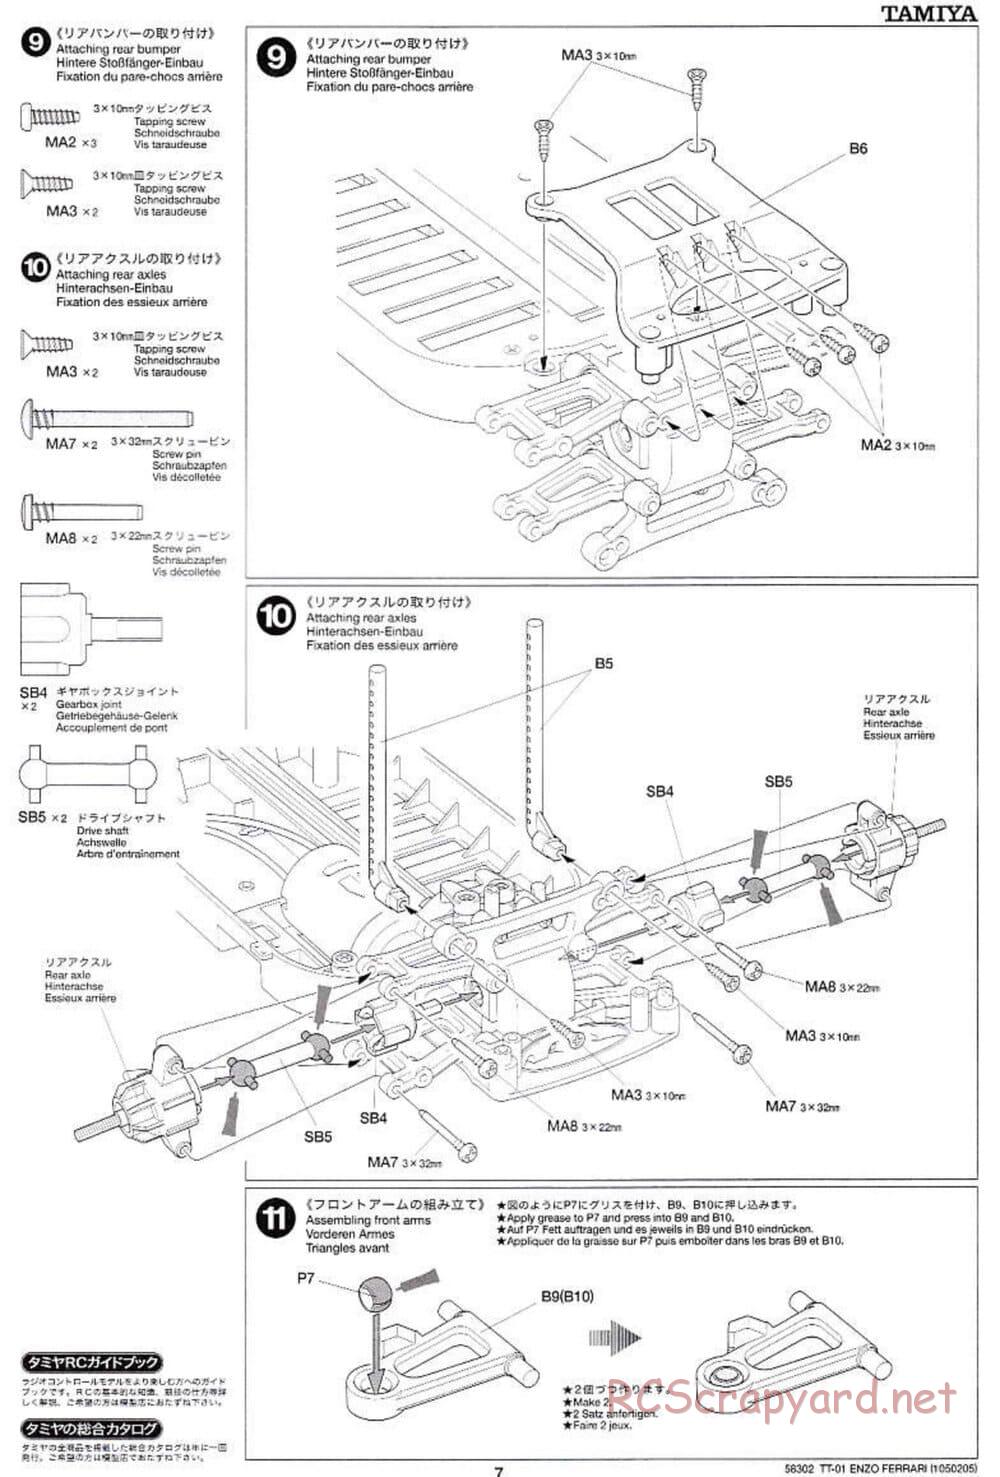 Tamiya - Enzo Ferrari - TT-01 Chassis - Manual - Page 7